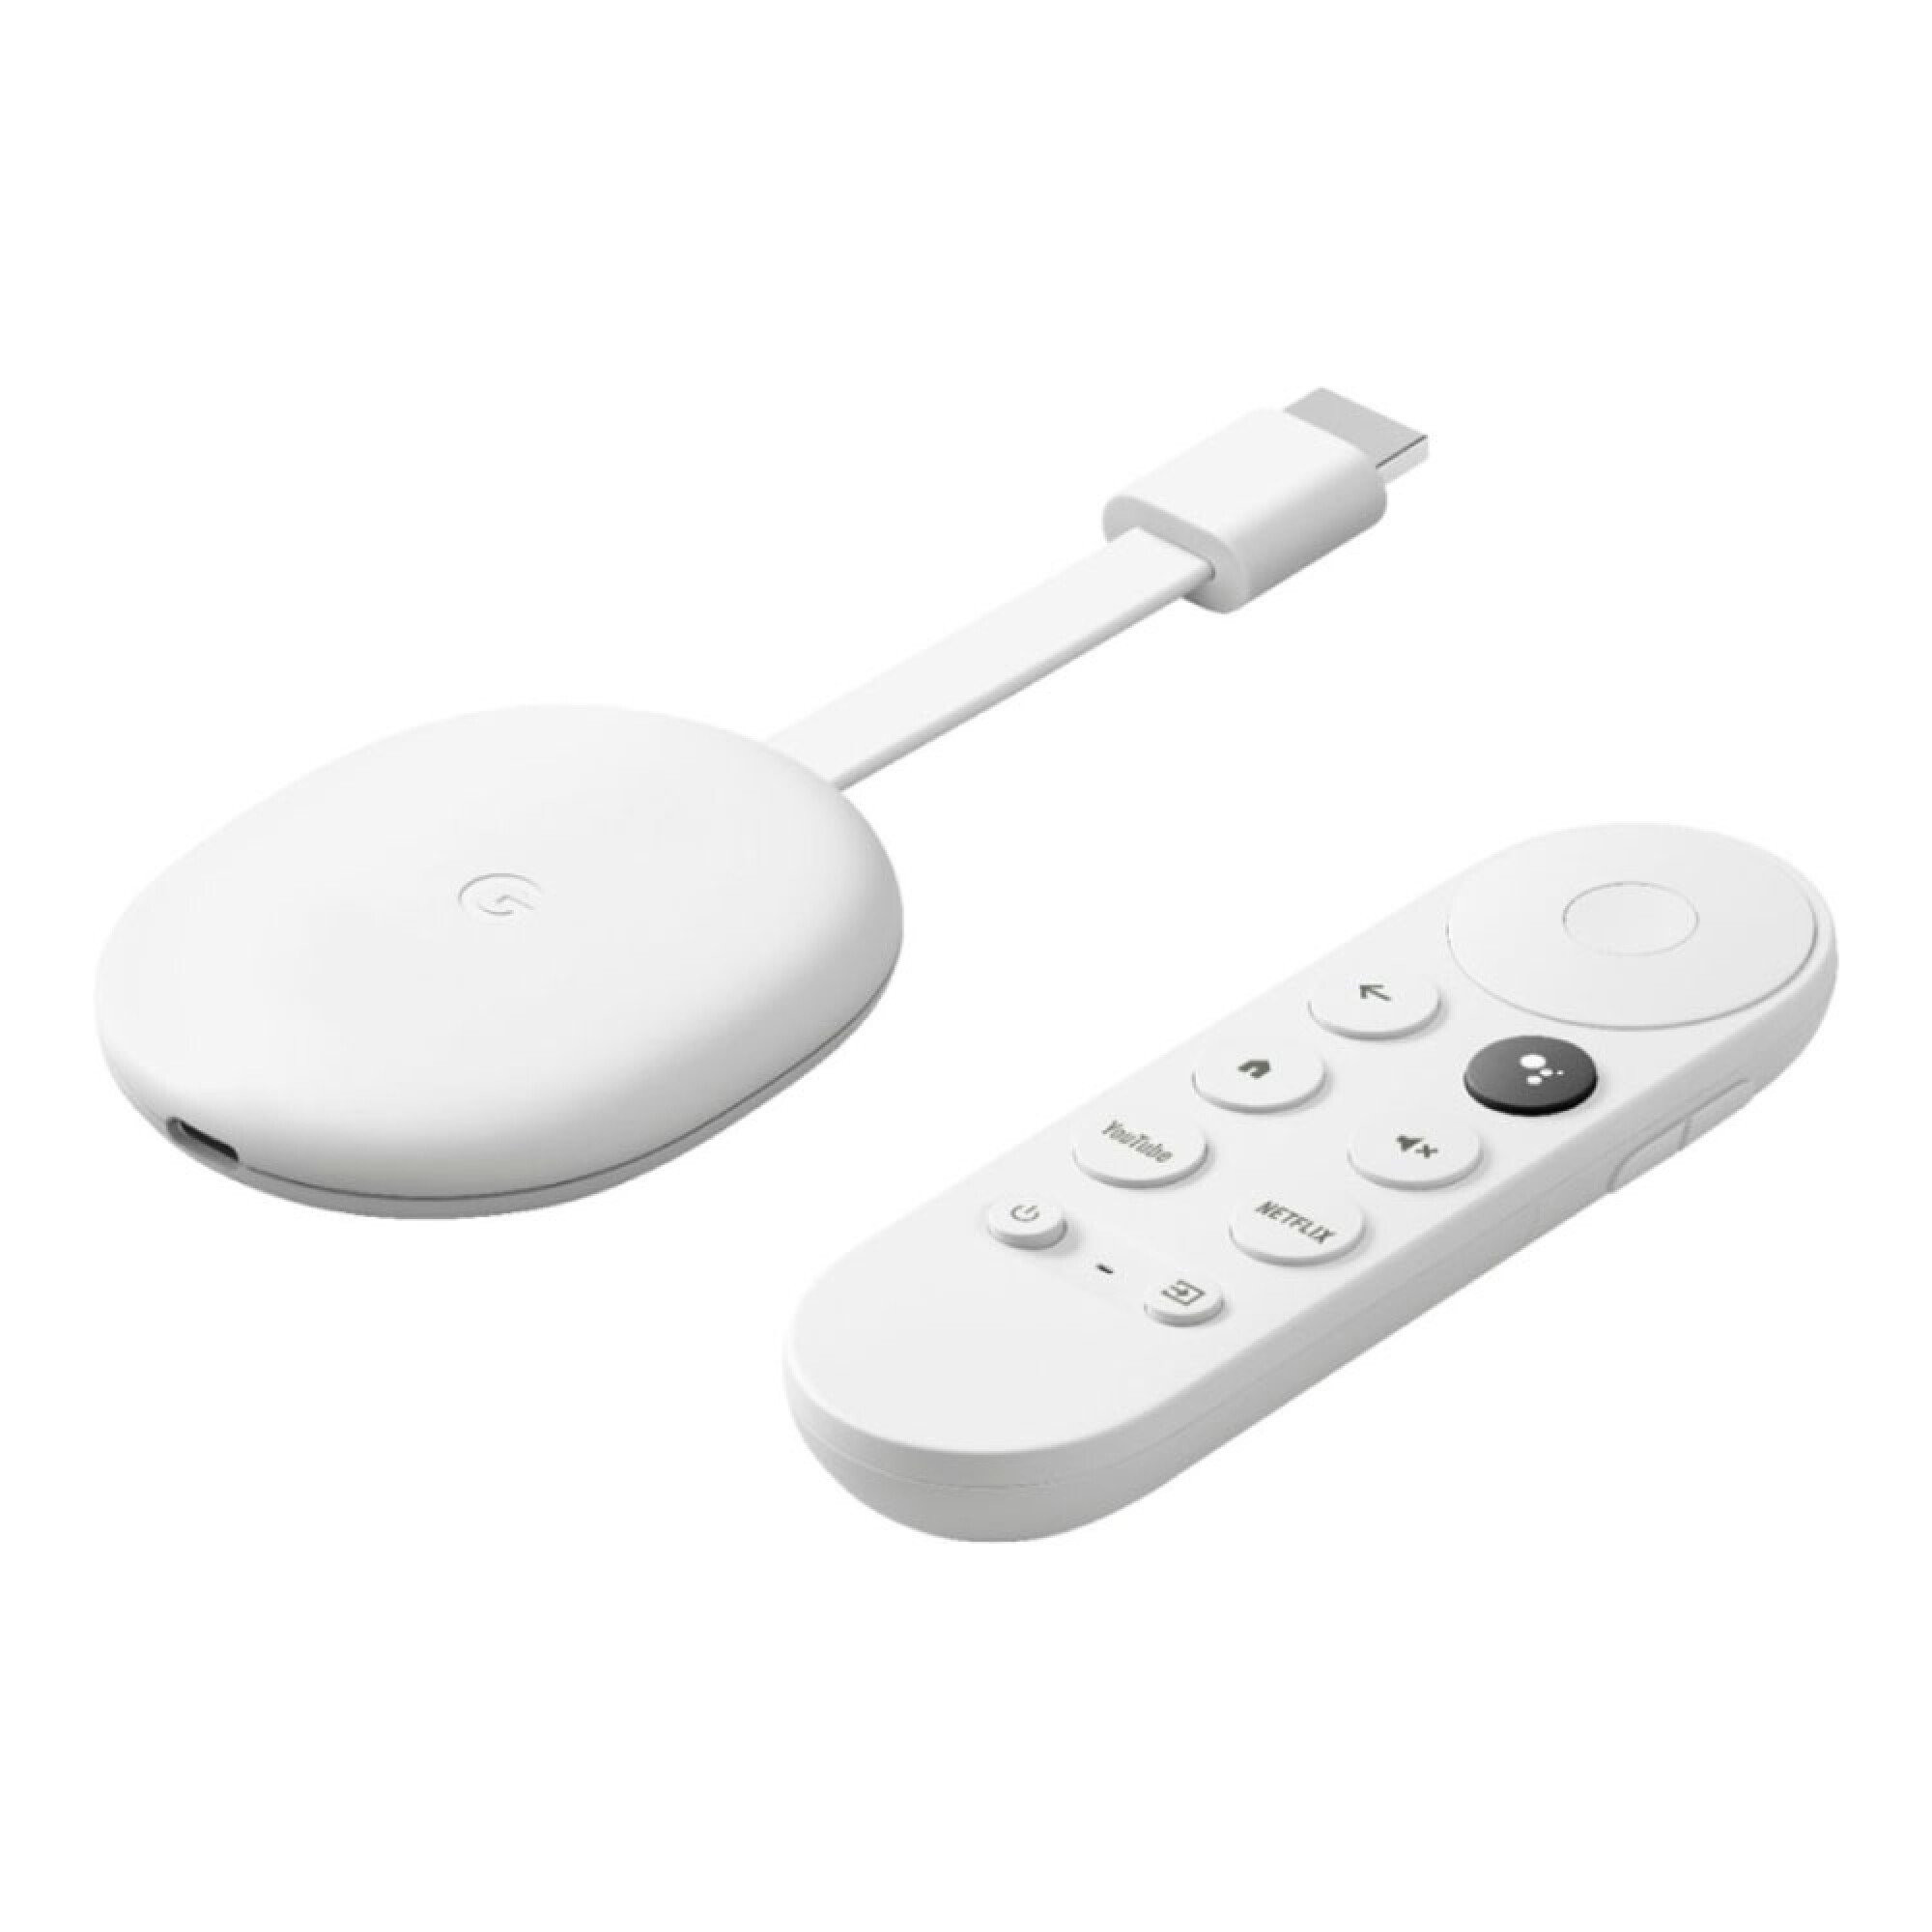 Control Voz Chromecast Google Tv, Control Voz Inteligente G9n9n Chromecast  Control Remoto Tv, Alta Calidad Asequible